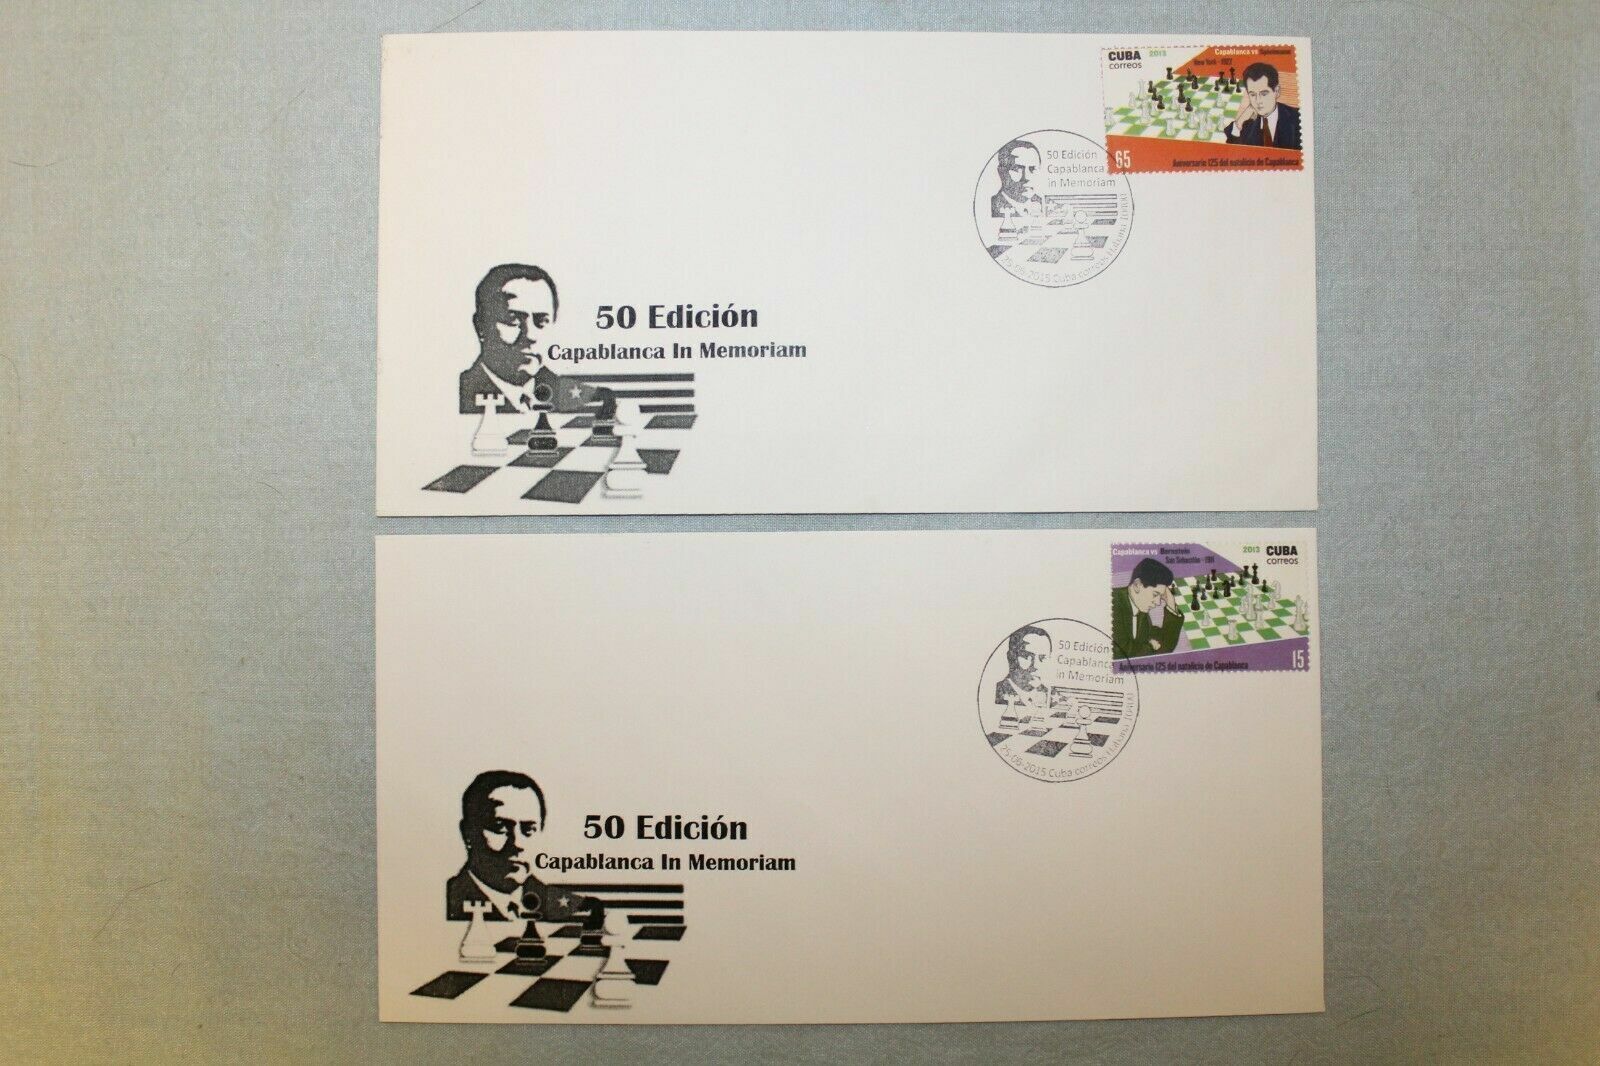 2 Chess Envelopes: 50 Edicion. Capablanca in Memoriam. Cuba 2015